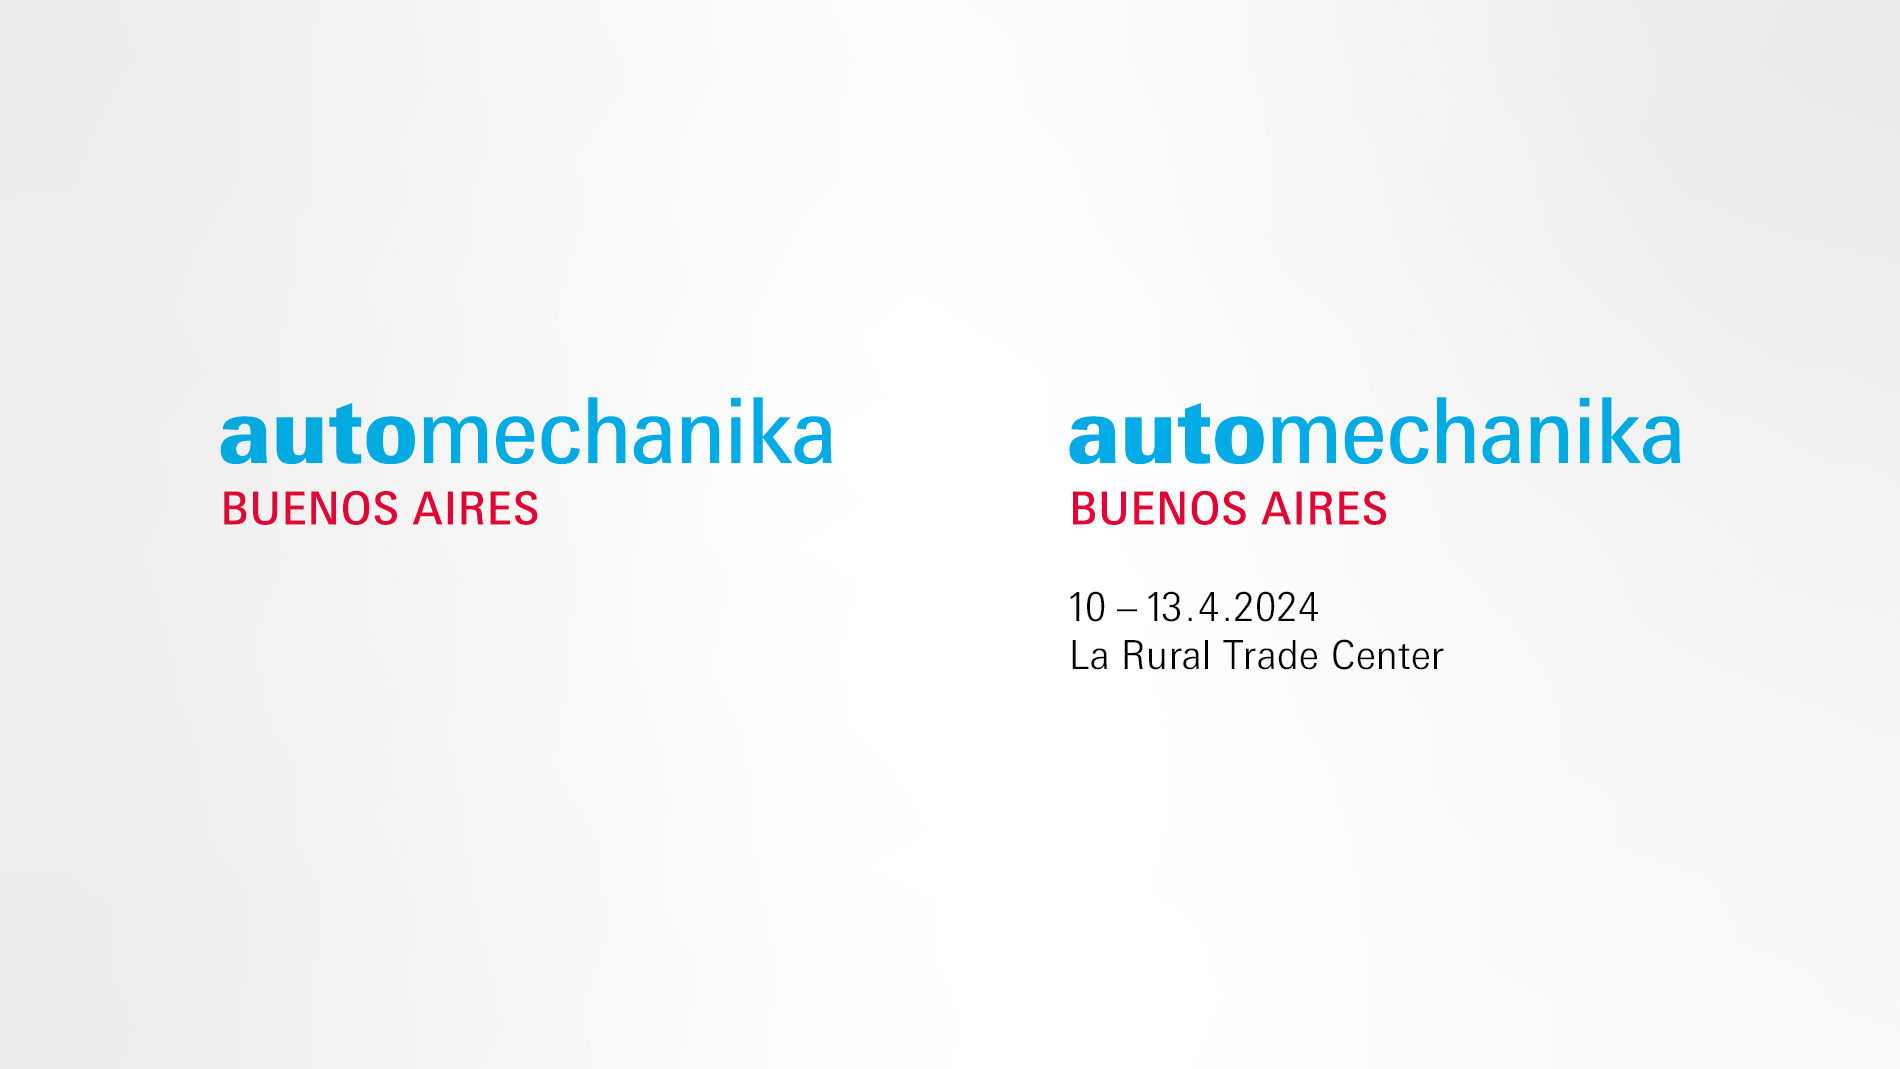 Automechanika Buenos Aires: Event logo